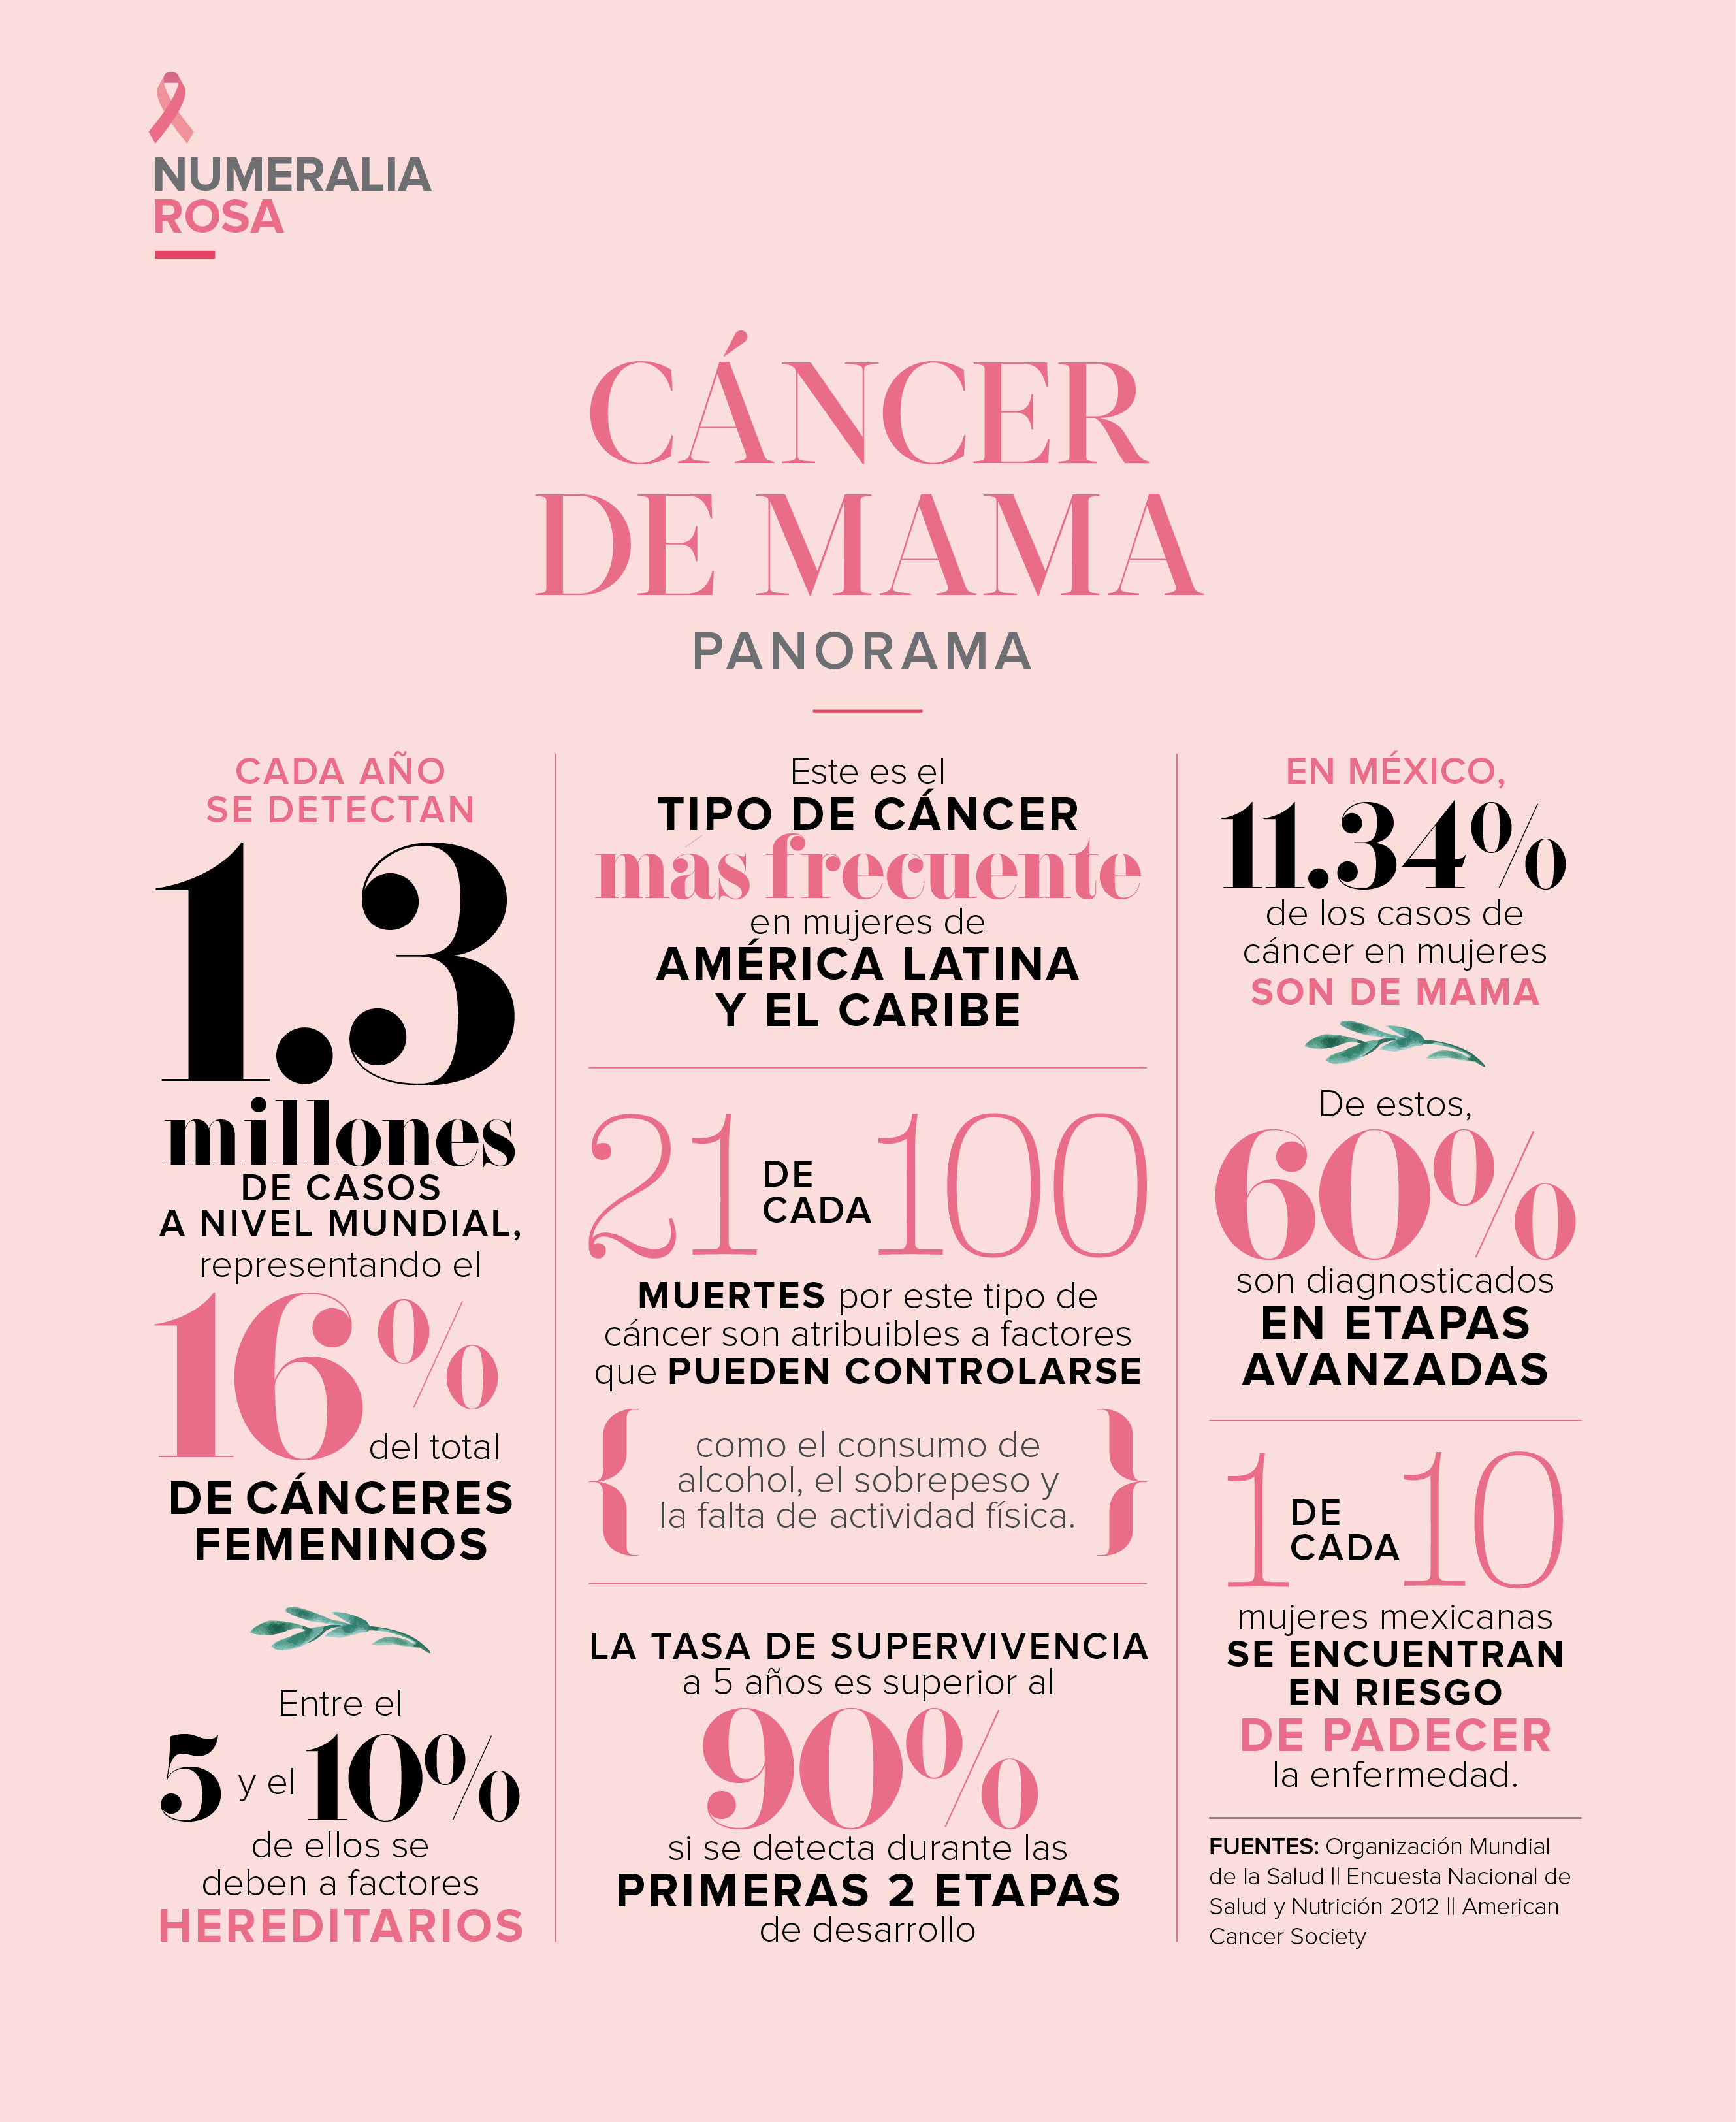 Numeralia de cáncer de mama en México